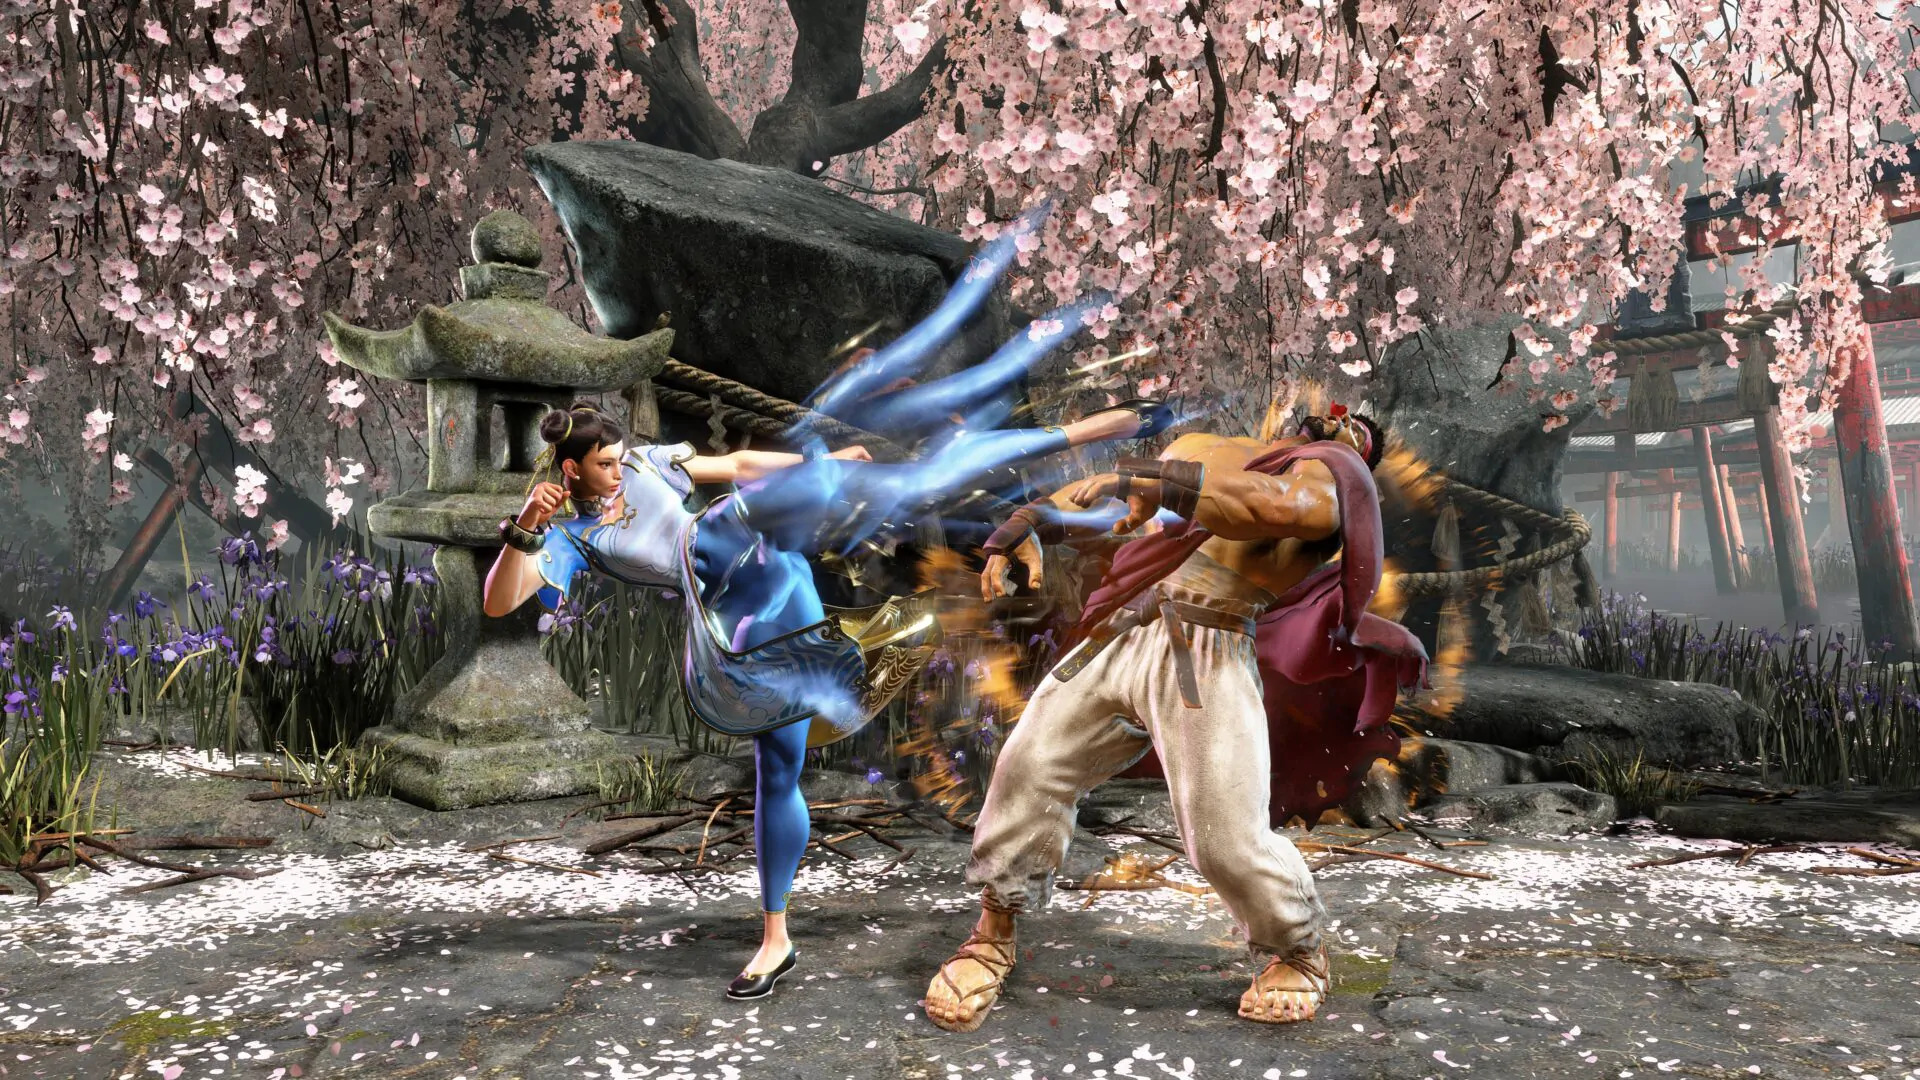 Street Fighter 6 gameplay screenshot